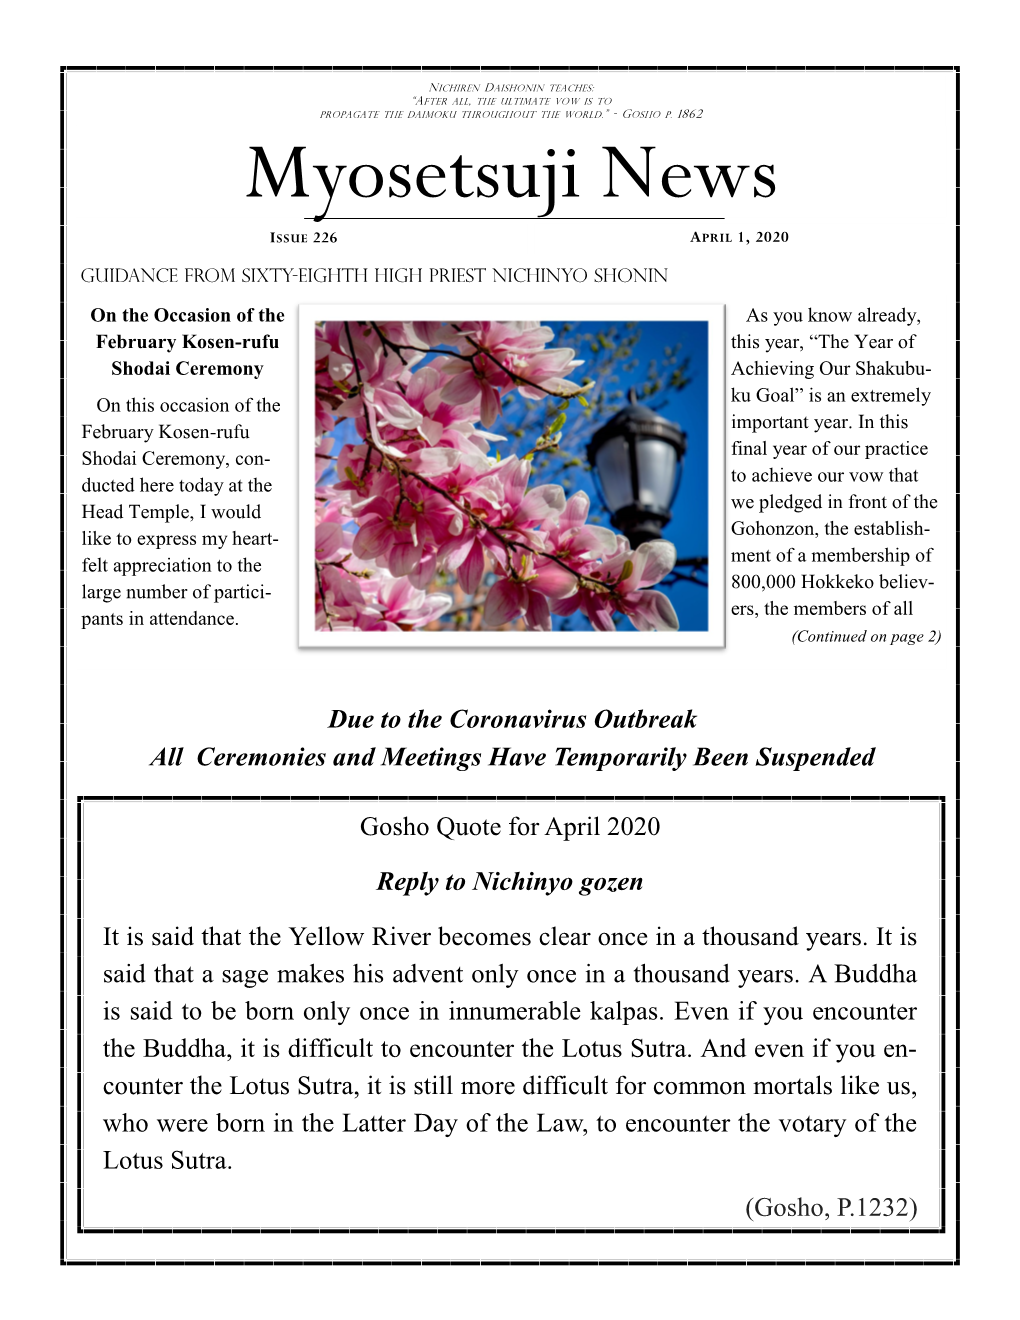 Myosetsuji News ISSUE 226 APRIL 1, 2020